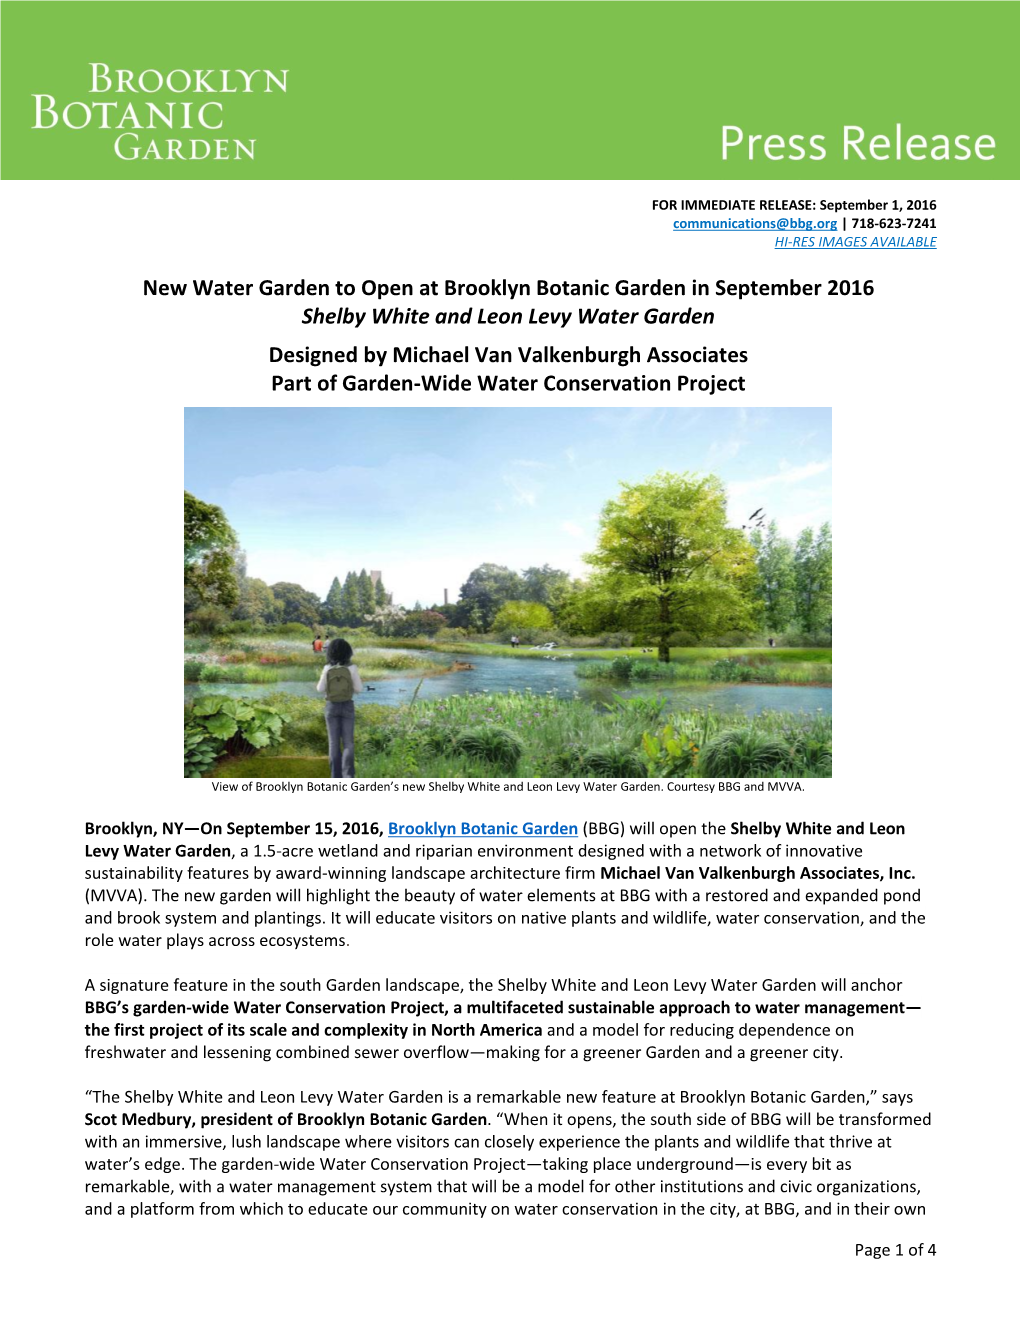 New Water Garden to Open at Brooklyn Botanic Garden In